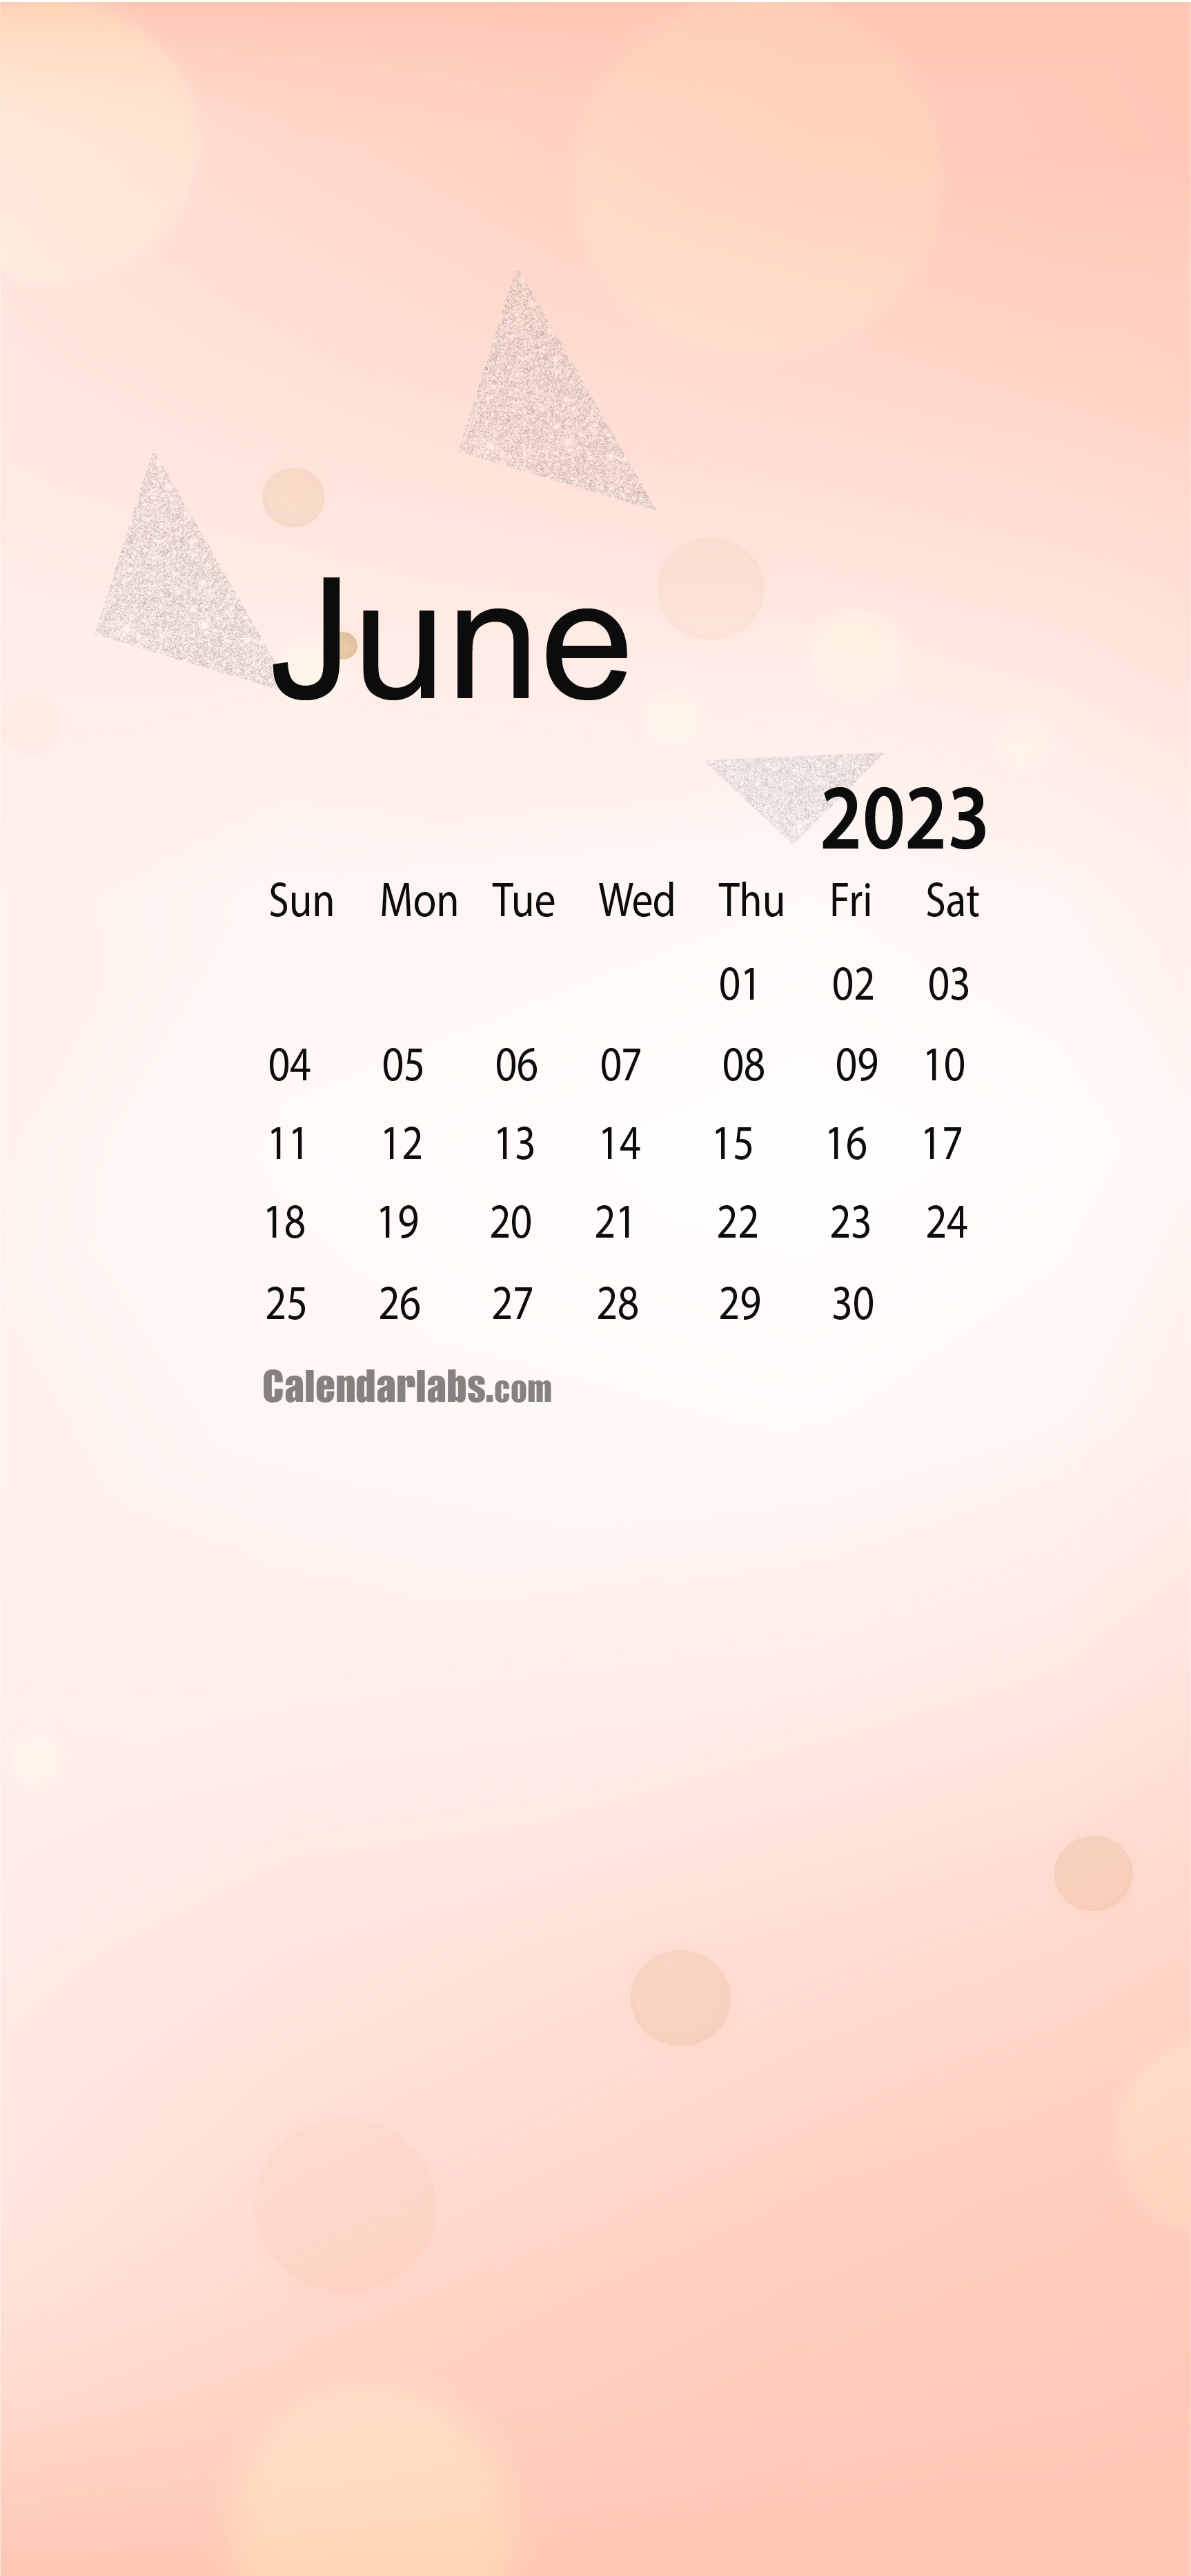 February 2020 - Black History Month Desktop Calendar- Free February  Wallpaper